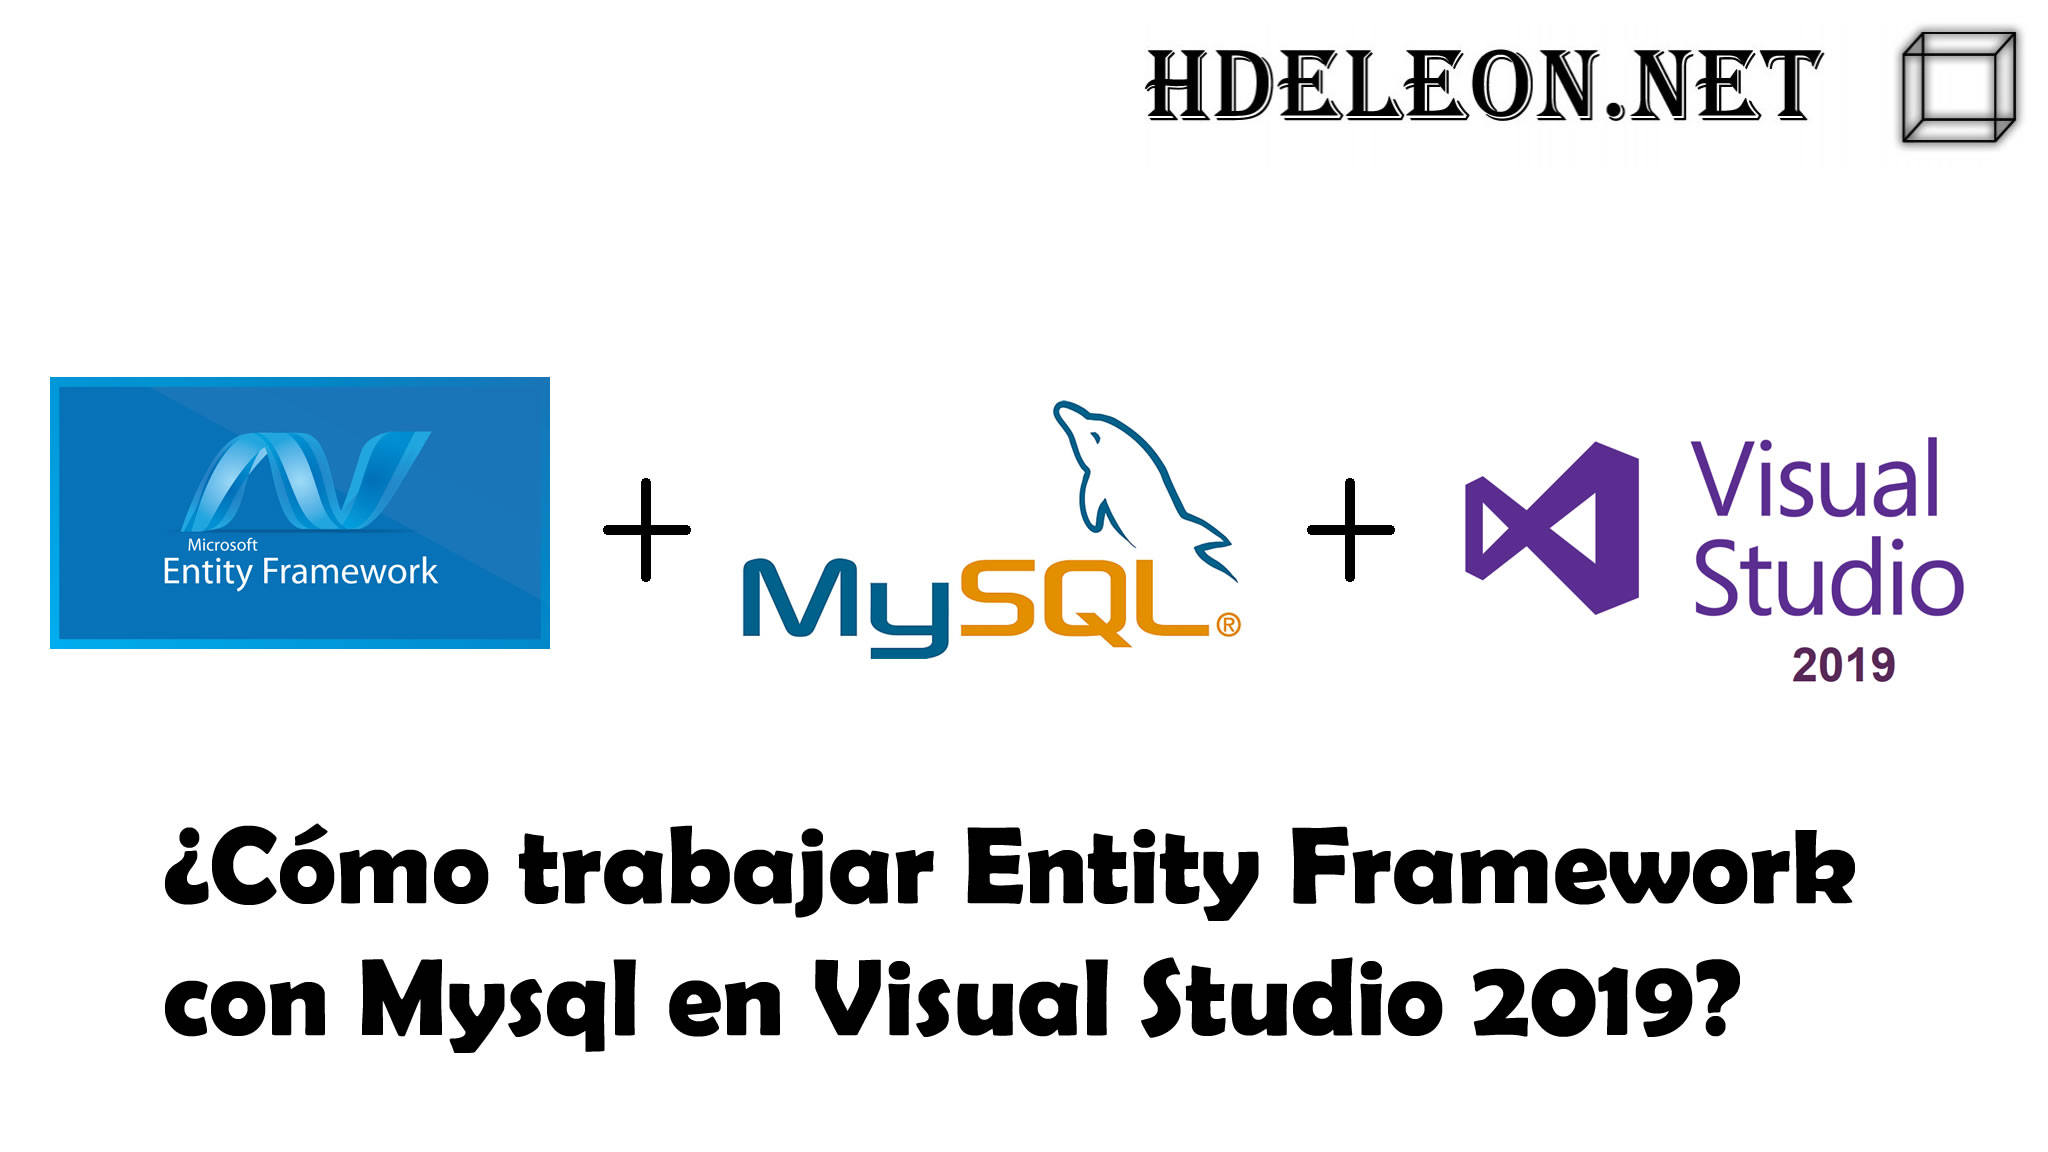 ¿Cómo trabajar Entity Framework con Mysql en Visual Studio 2019?